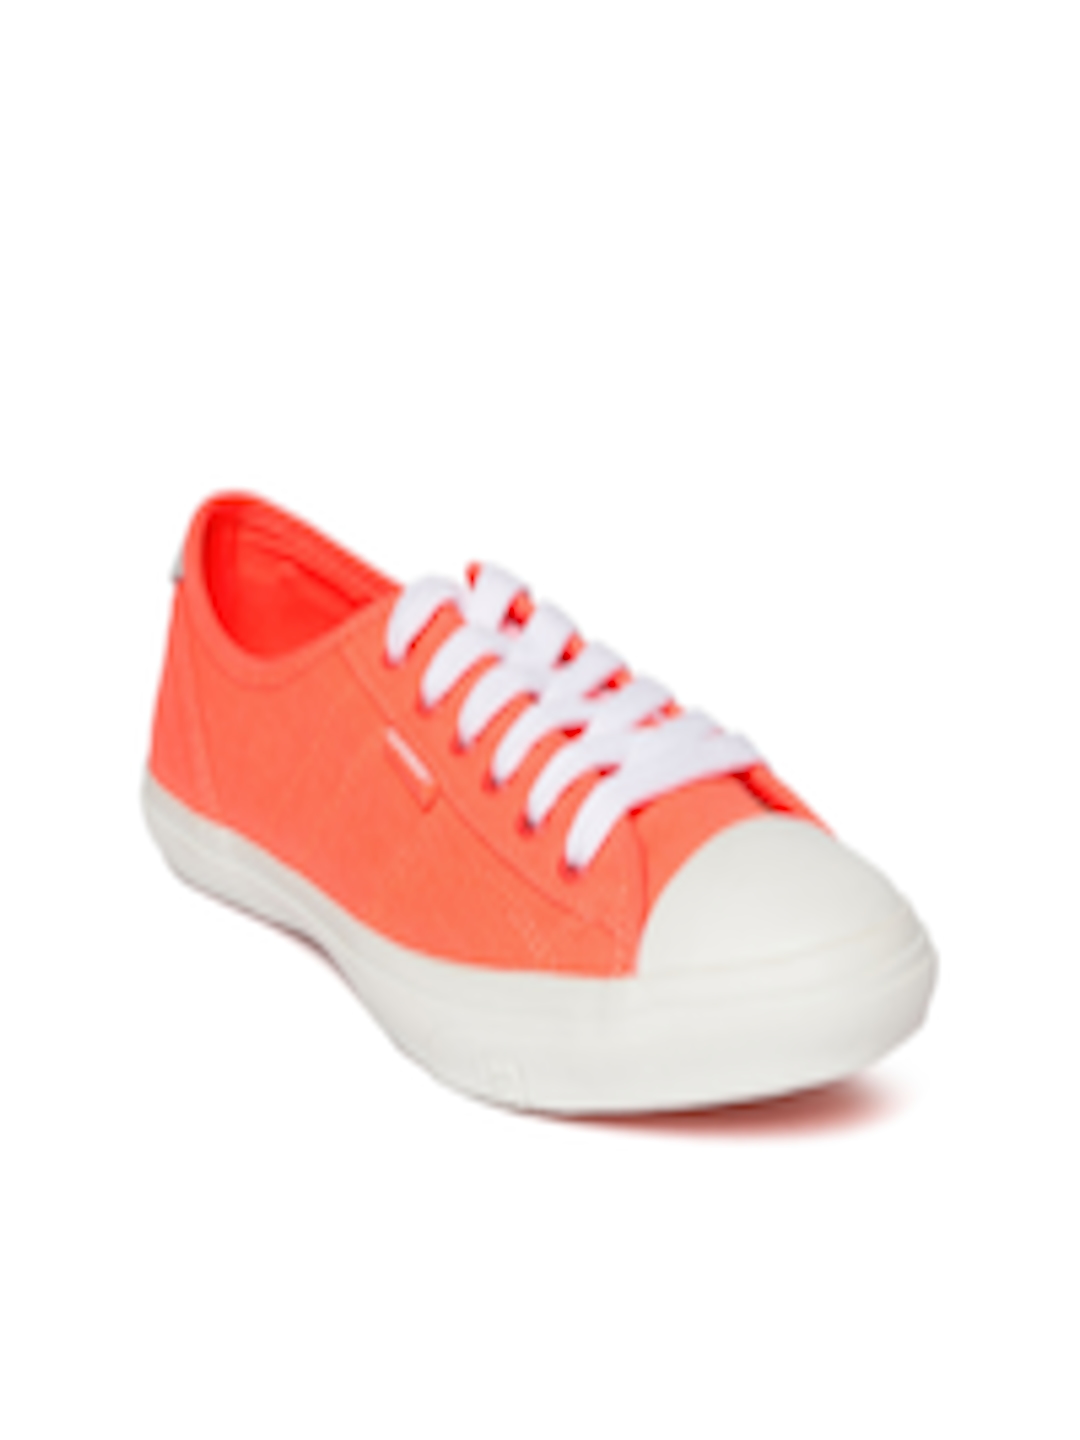 Buy Superdry Women Coral Orange Sneakers Casual Shoes